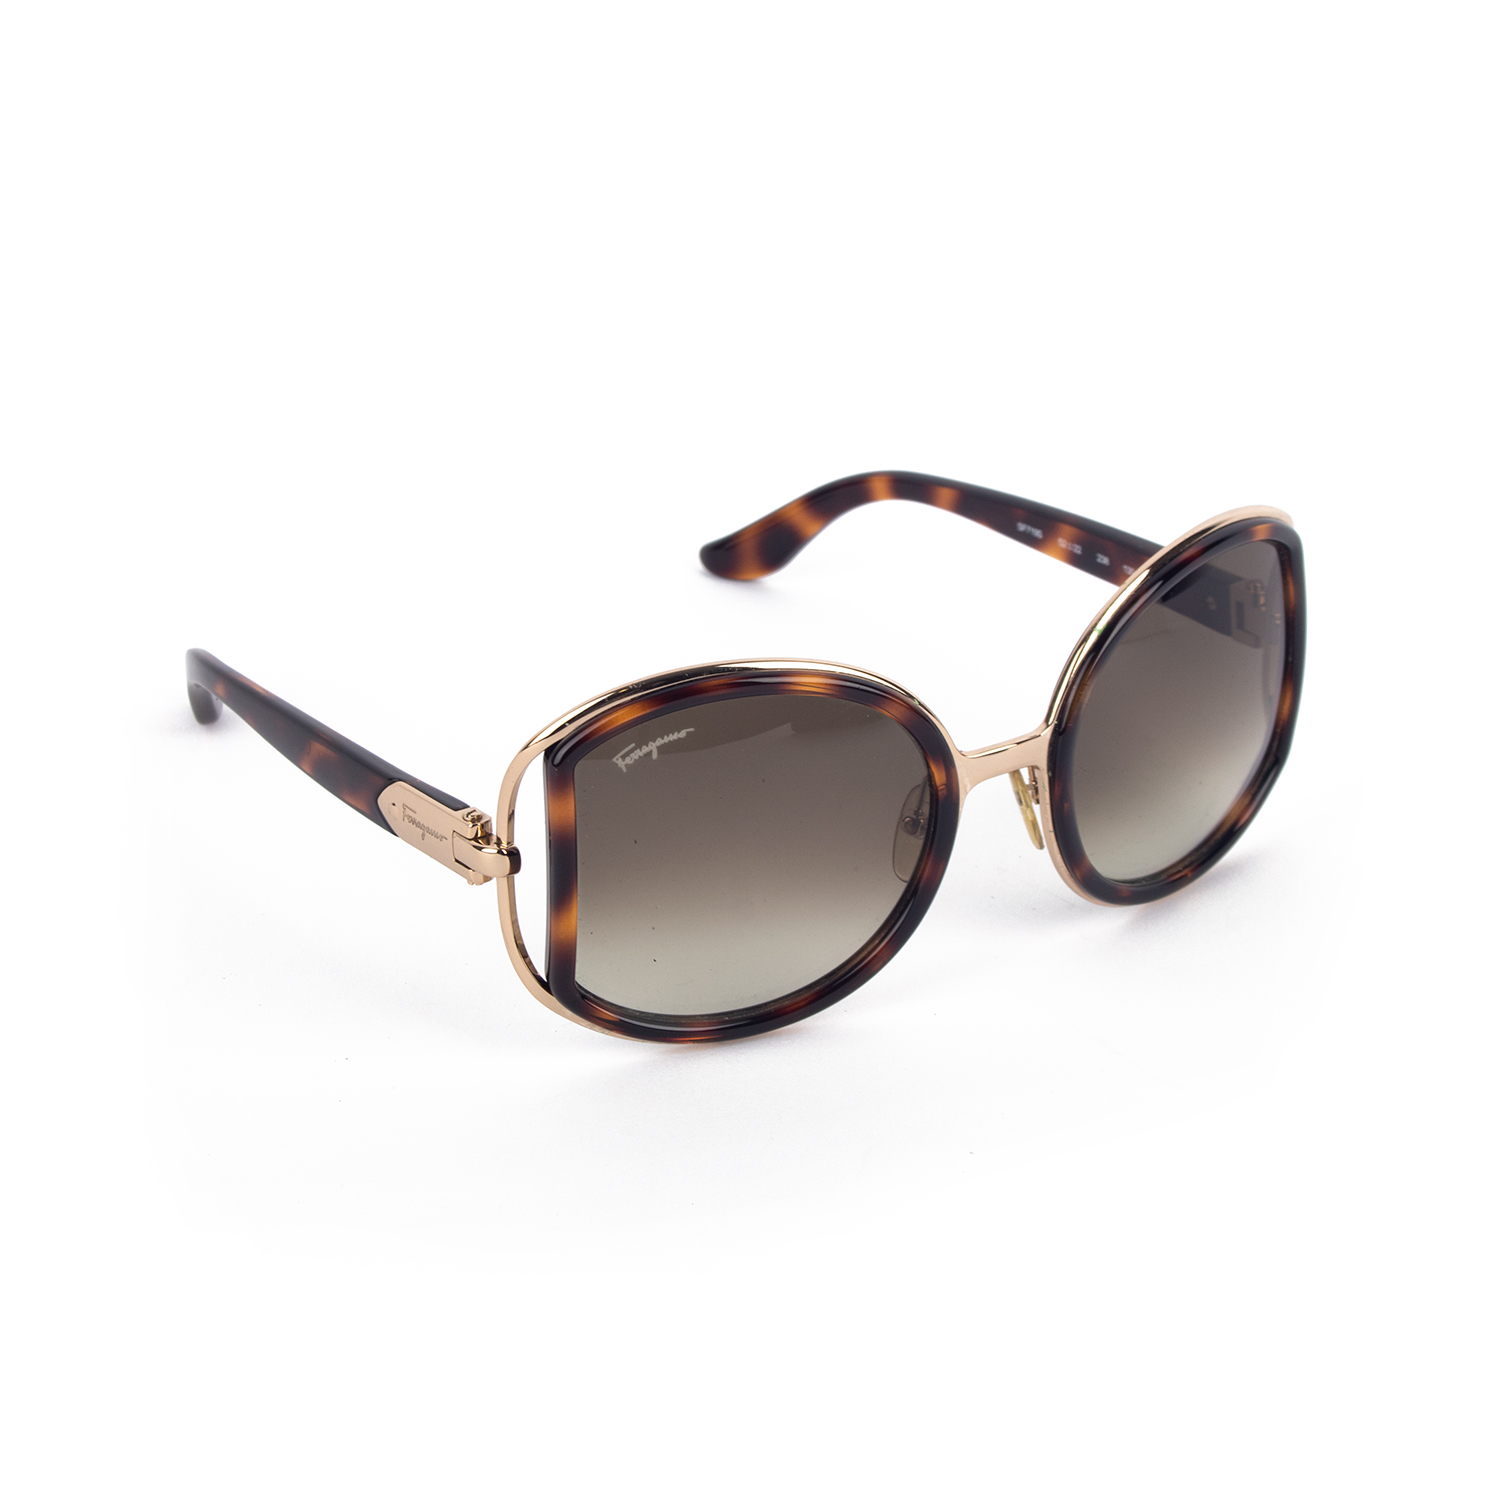 Brown/ Golden D shape Sunglasses